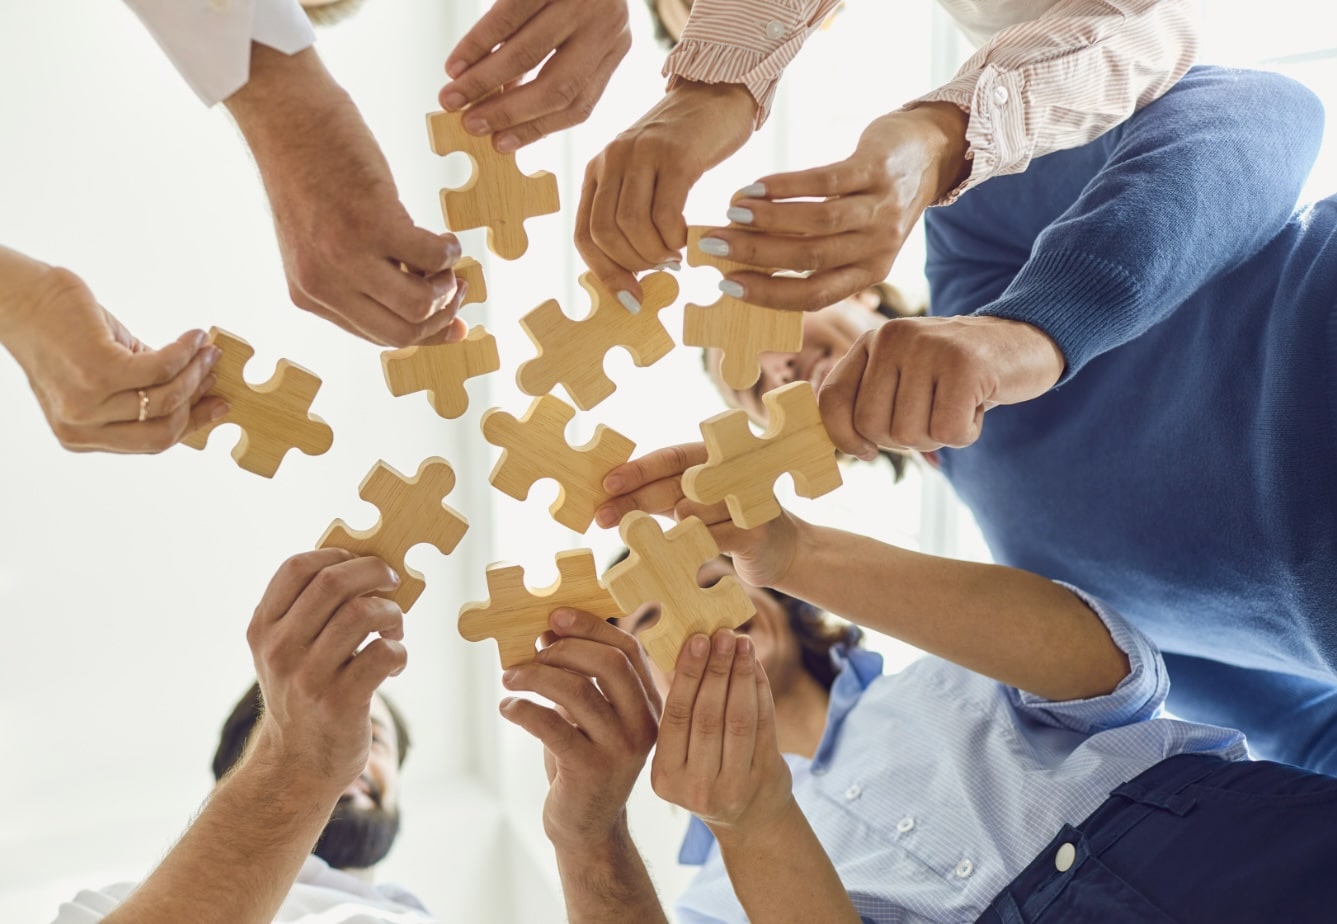 Teamsamtalen – en måte å binde teamet sammen